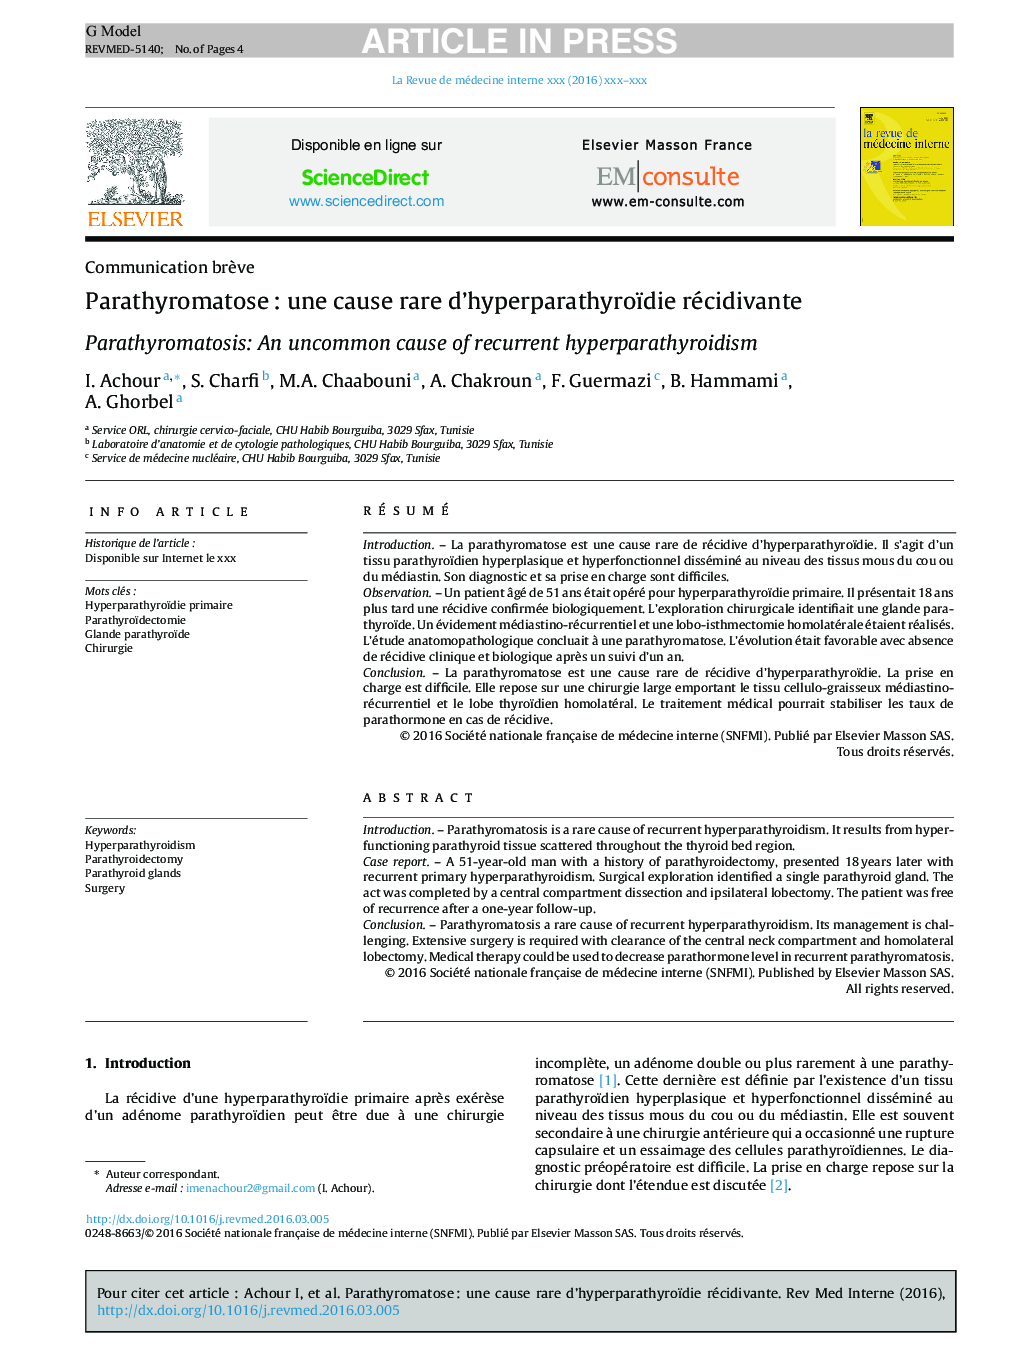 ParathyromatoseÂ : une cause rare d'hyperparathyroïdie récidivante